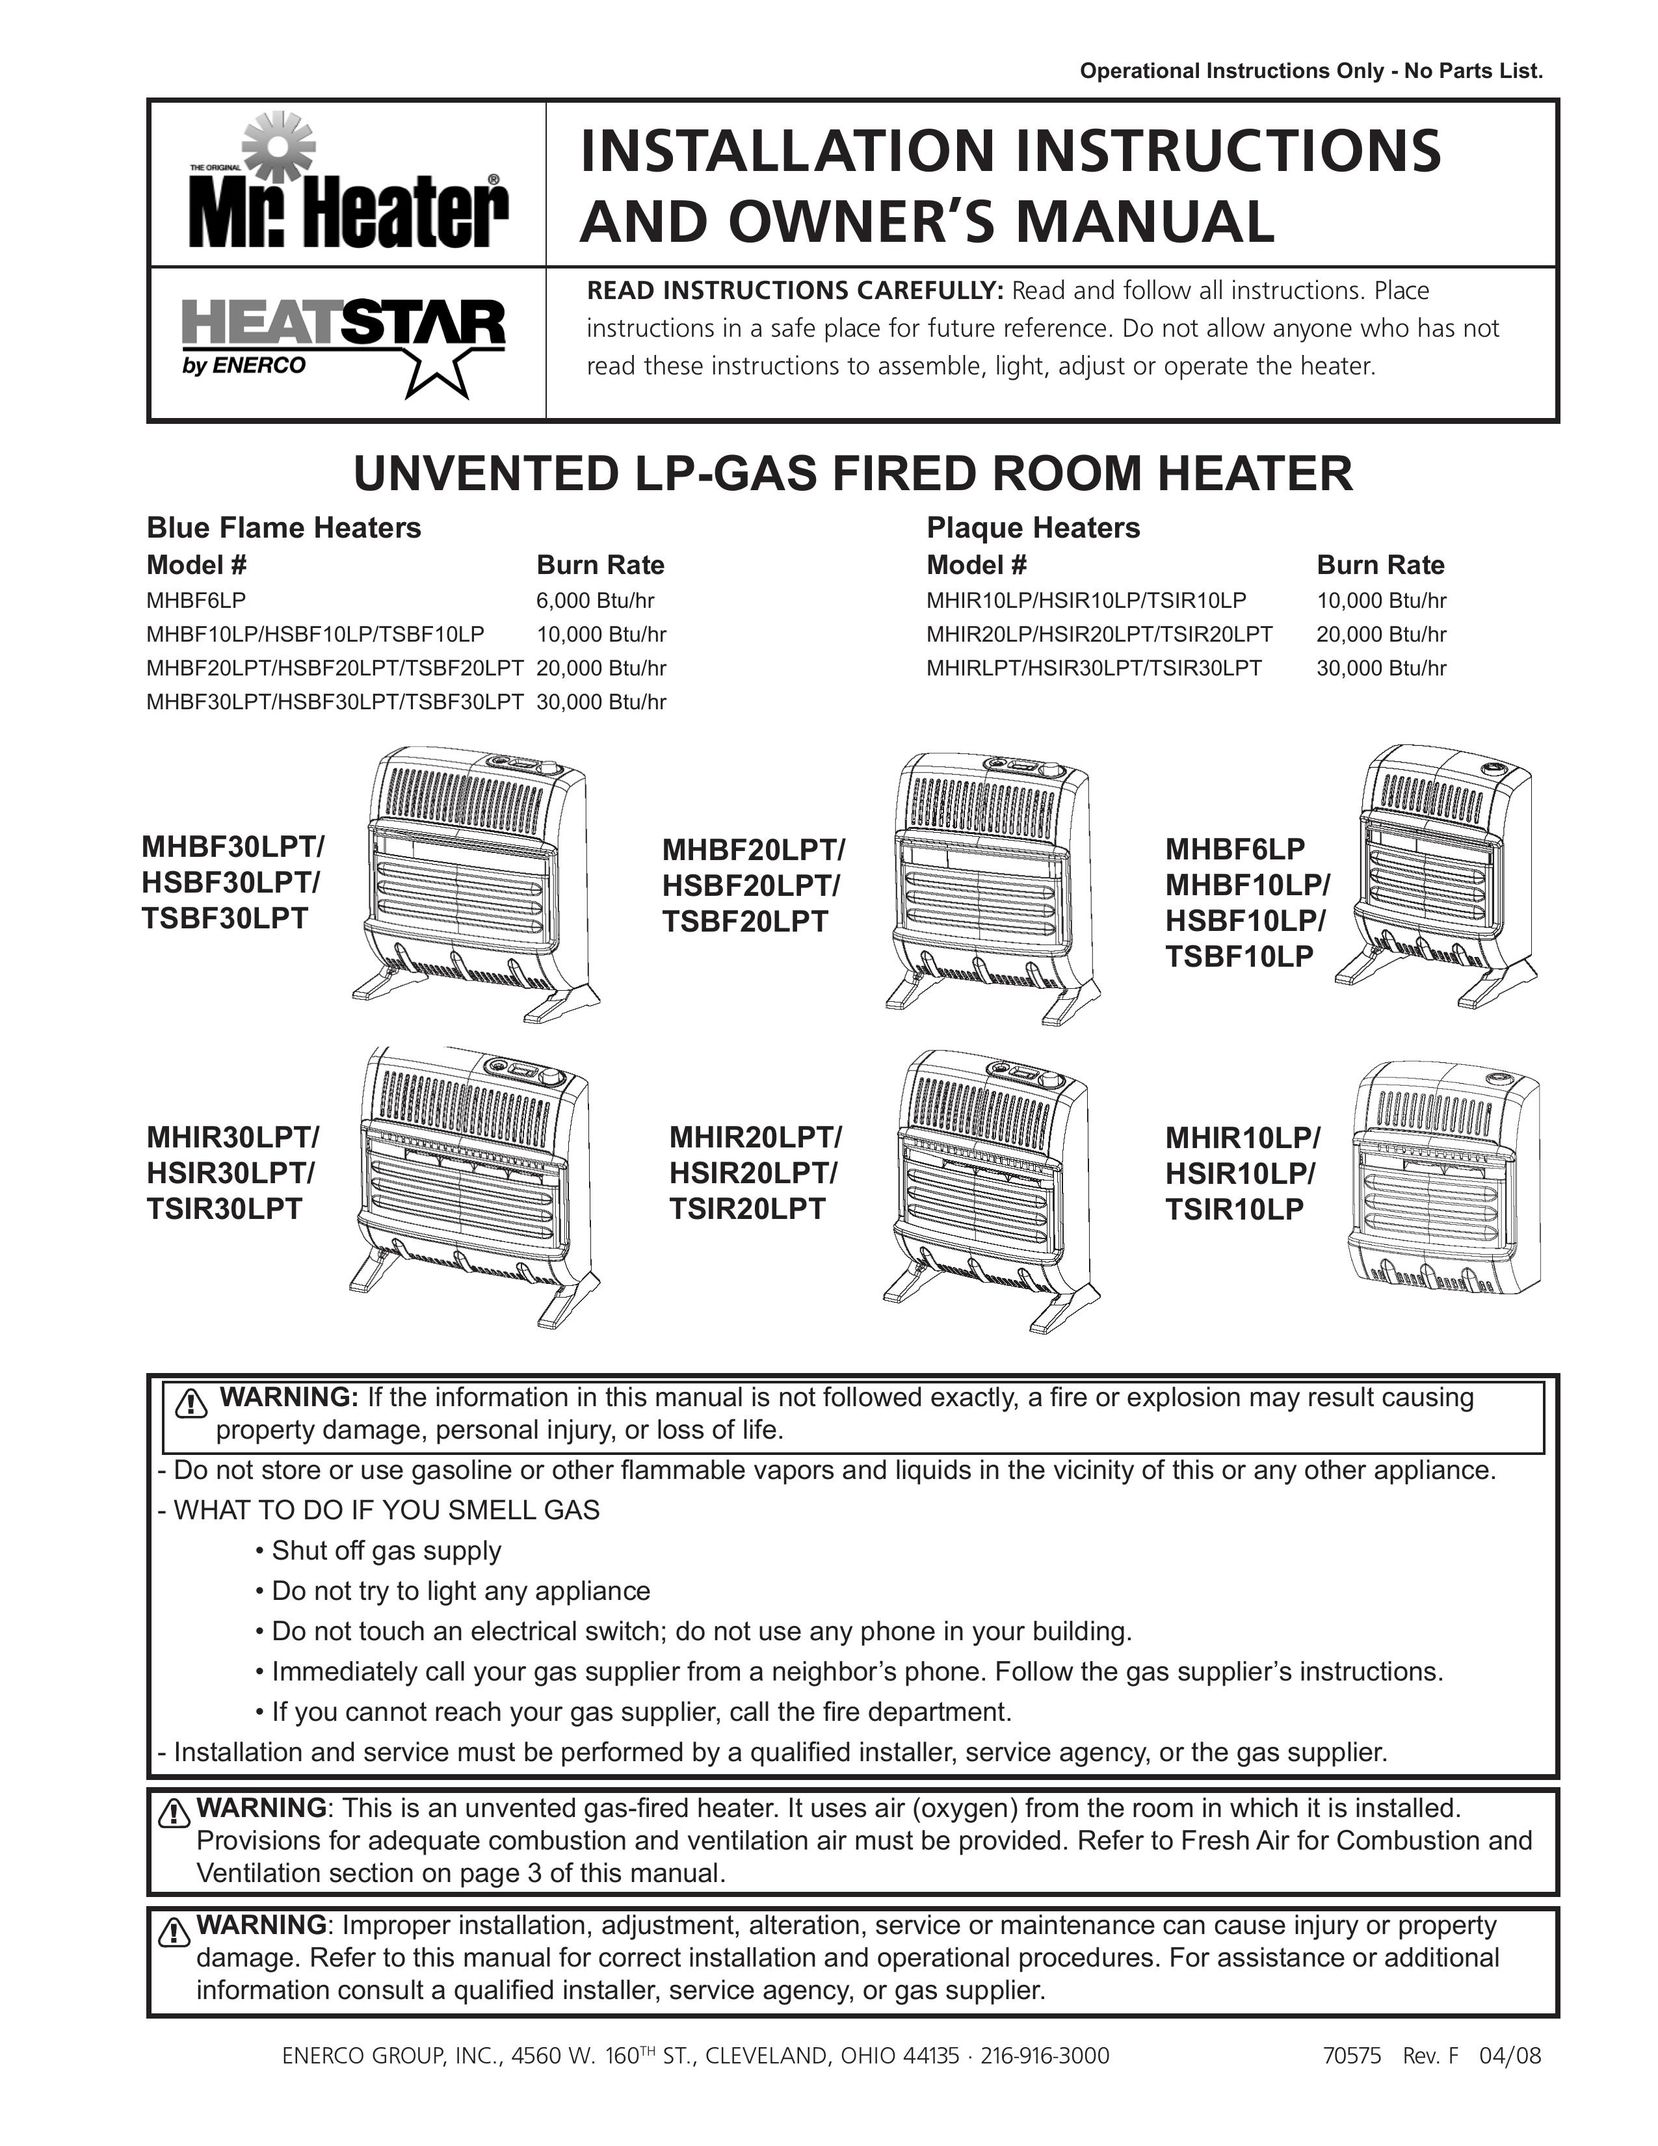 Enerco HSIR30LPT Electric Heater User Manual